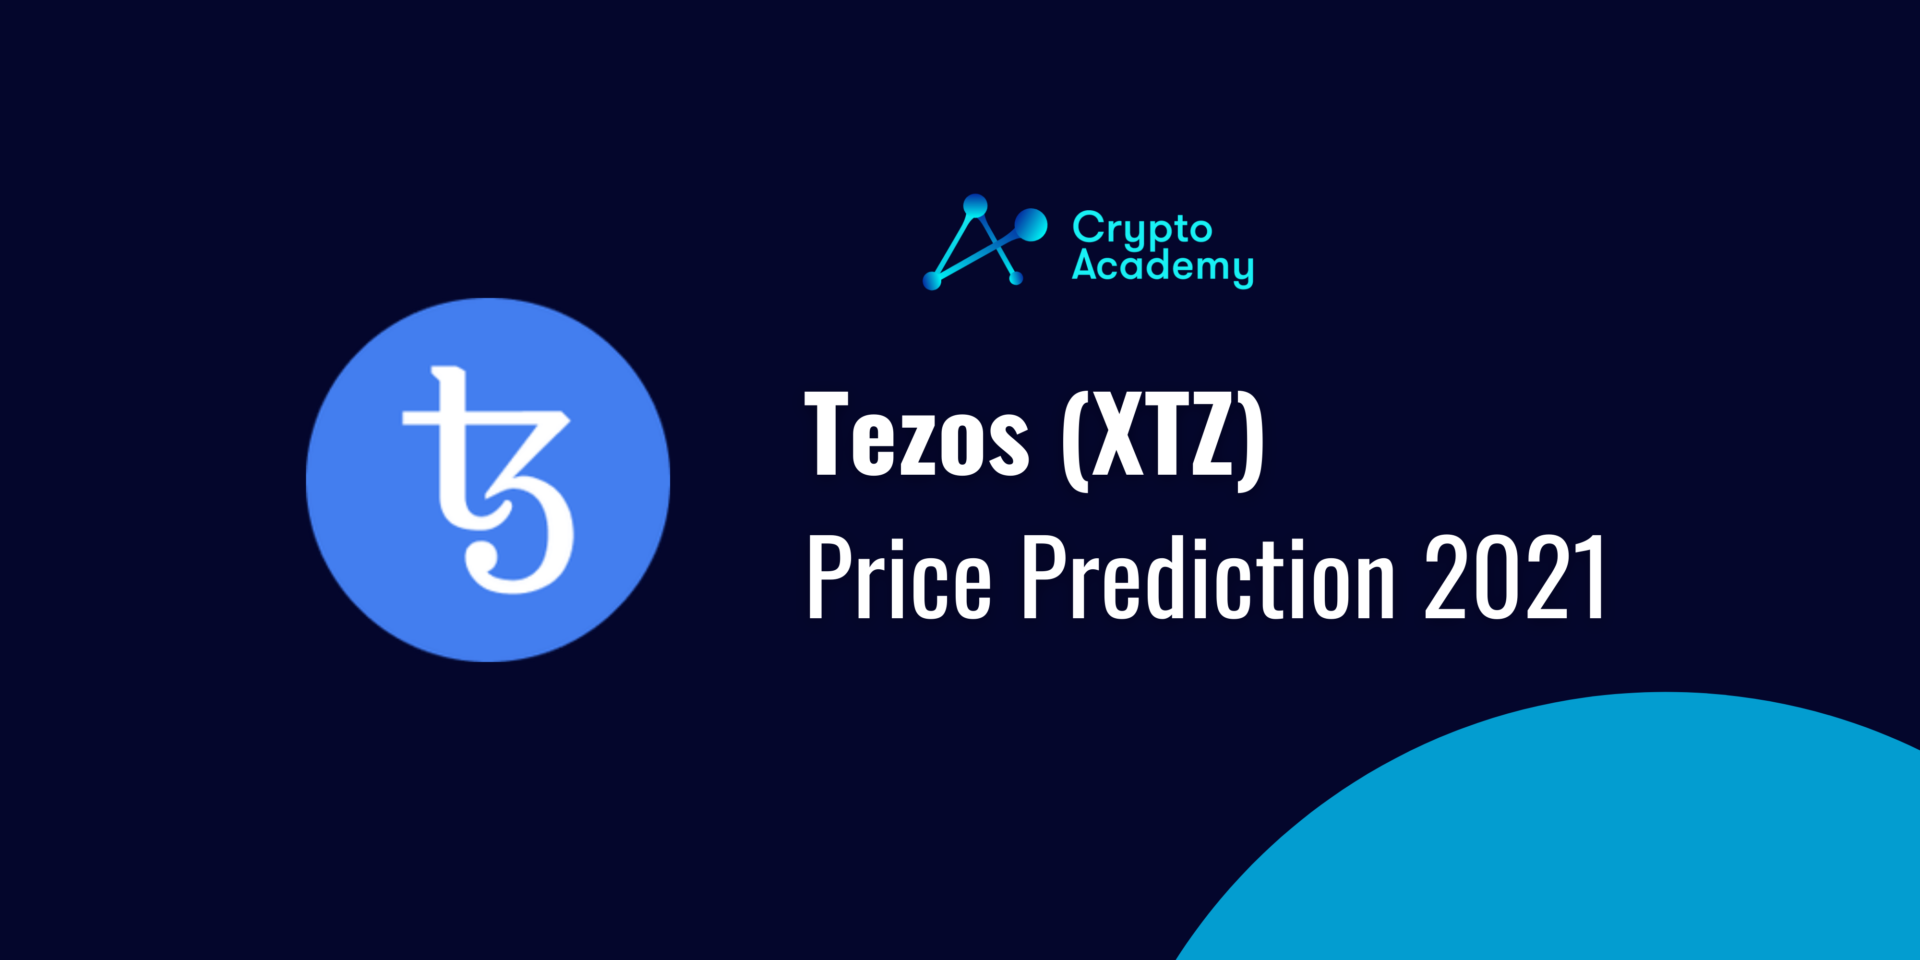 Tezos (XTZ) Price Prediction 2021 and Beyond – Will XTZ Reach $100?